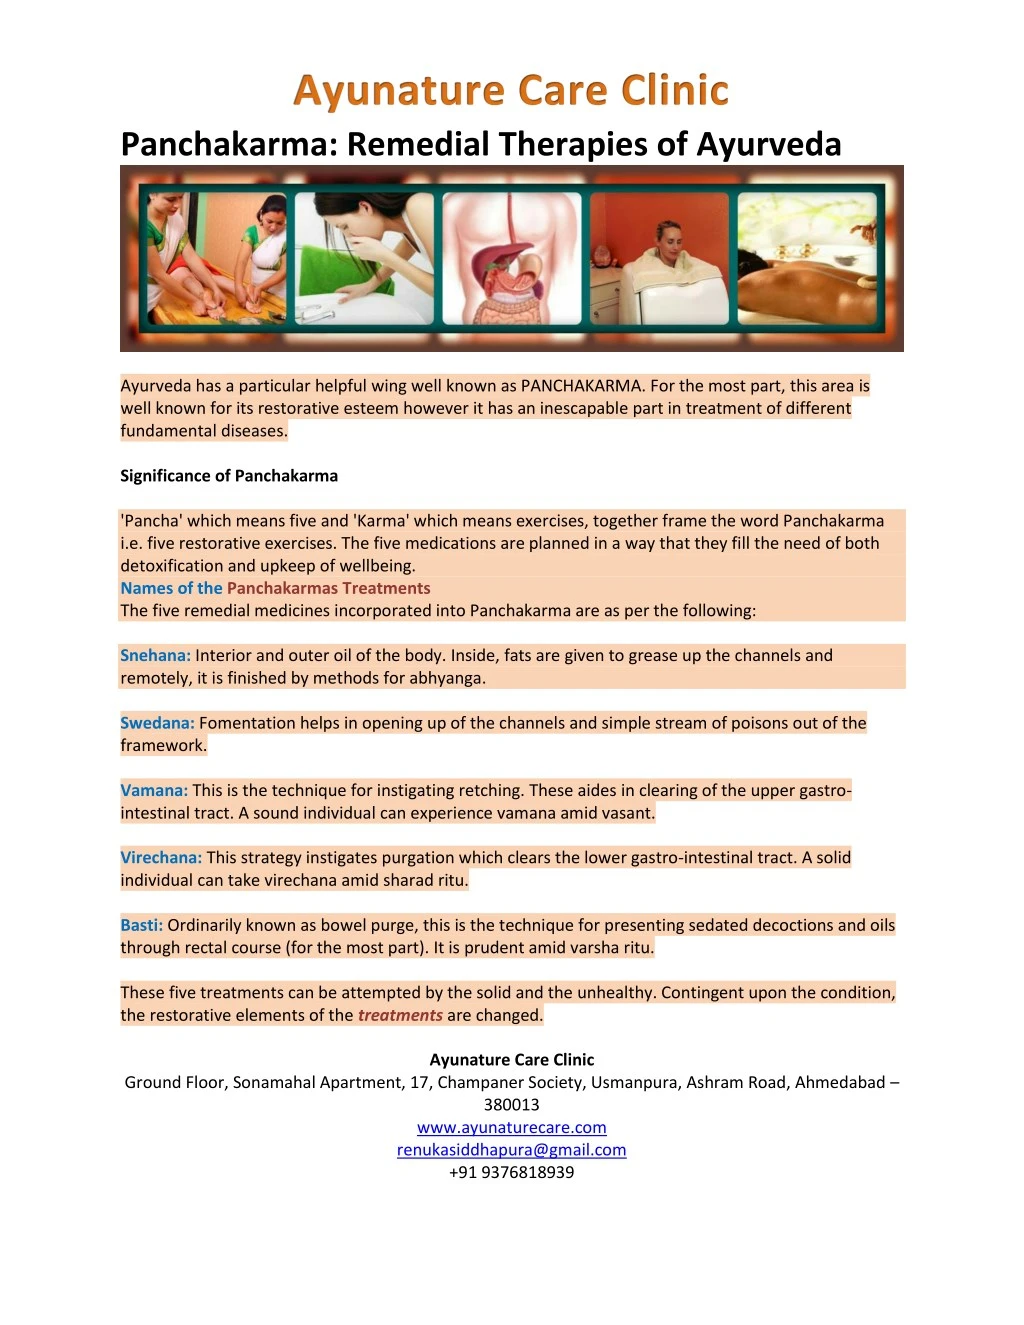 panchakarma remedial therapies of ayurveda